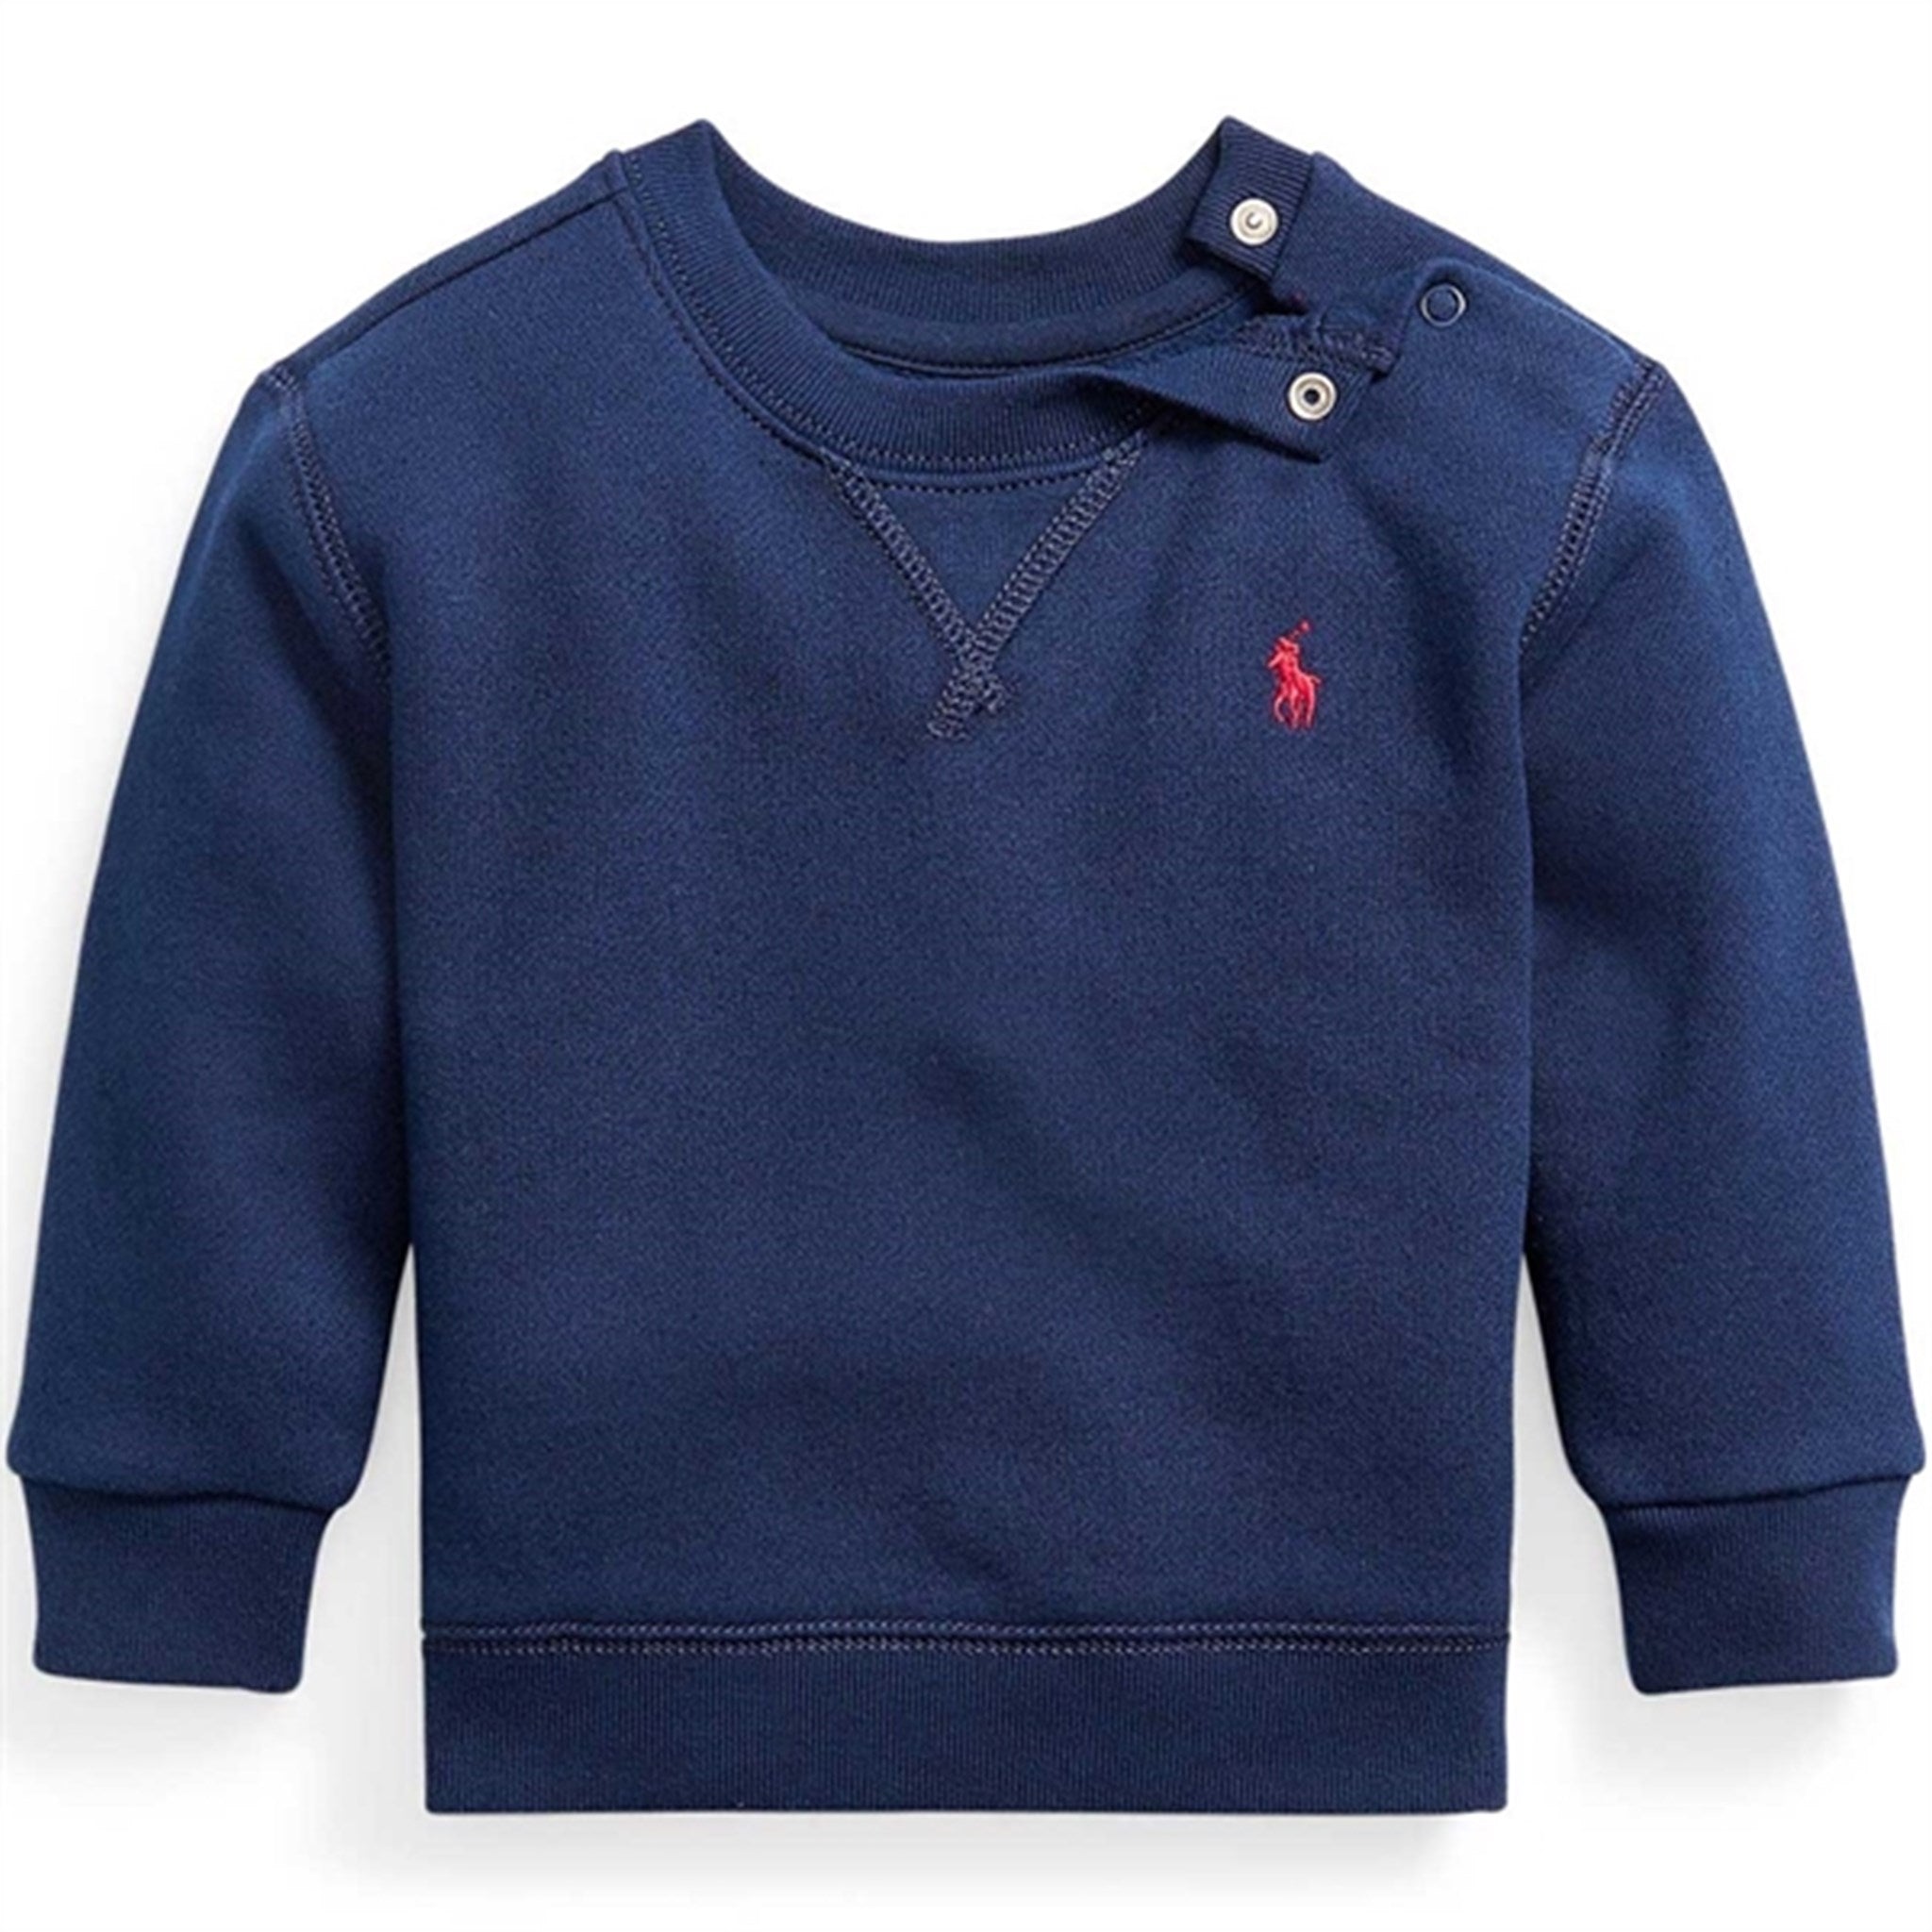 Polo Ralph Lauren Baby Boy Sweatshirt Cruise Navy